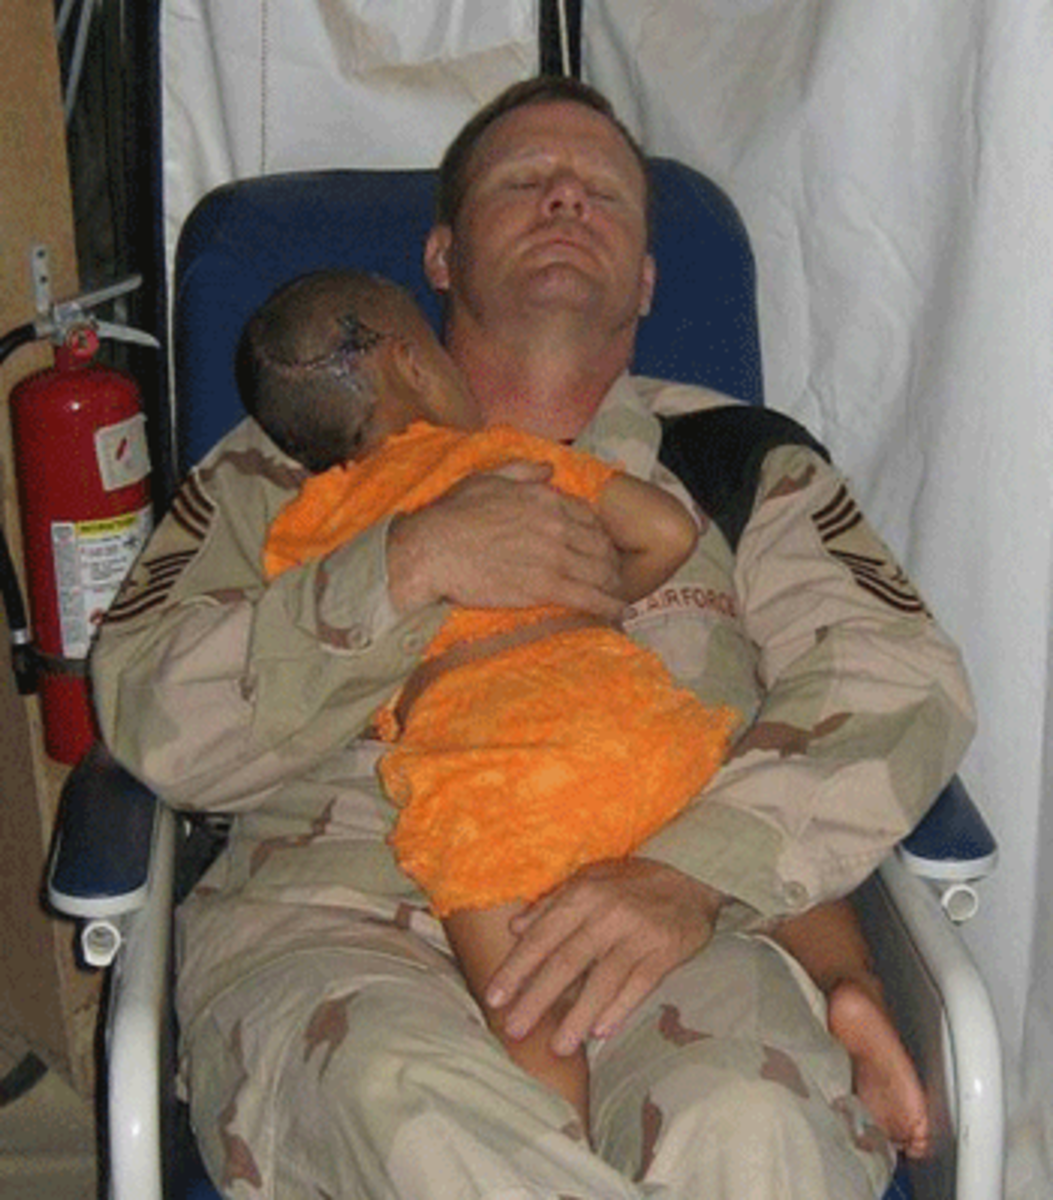 American airman John Gebhardt with Iraqi child.